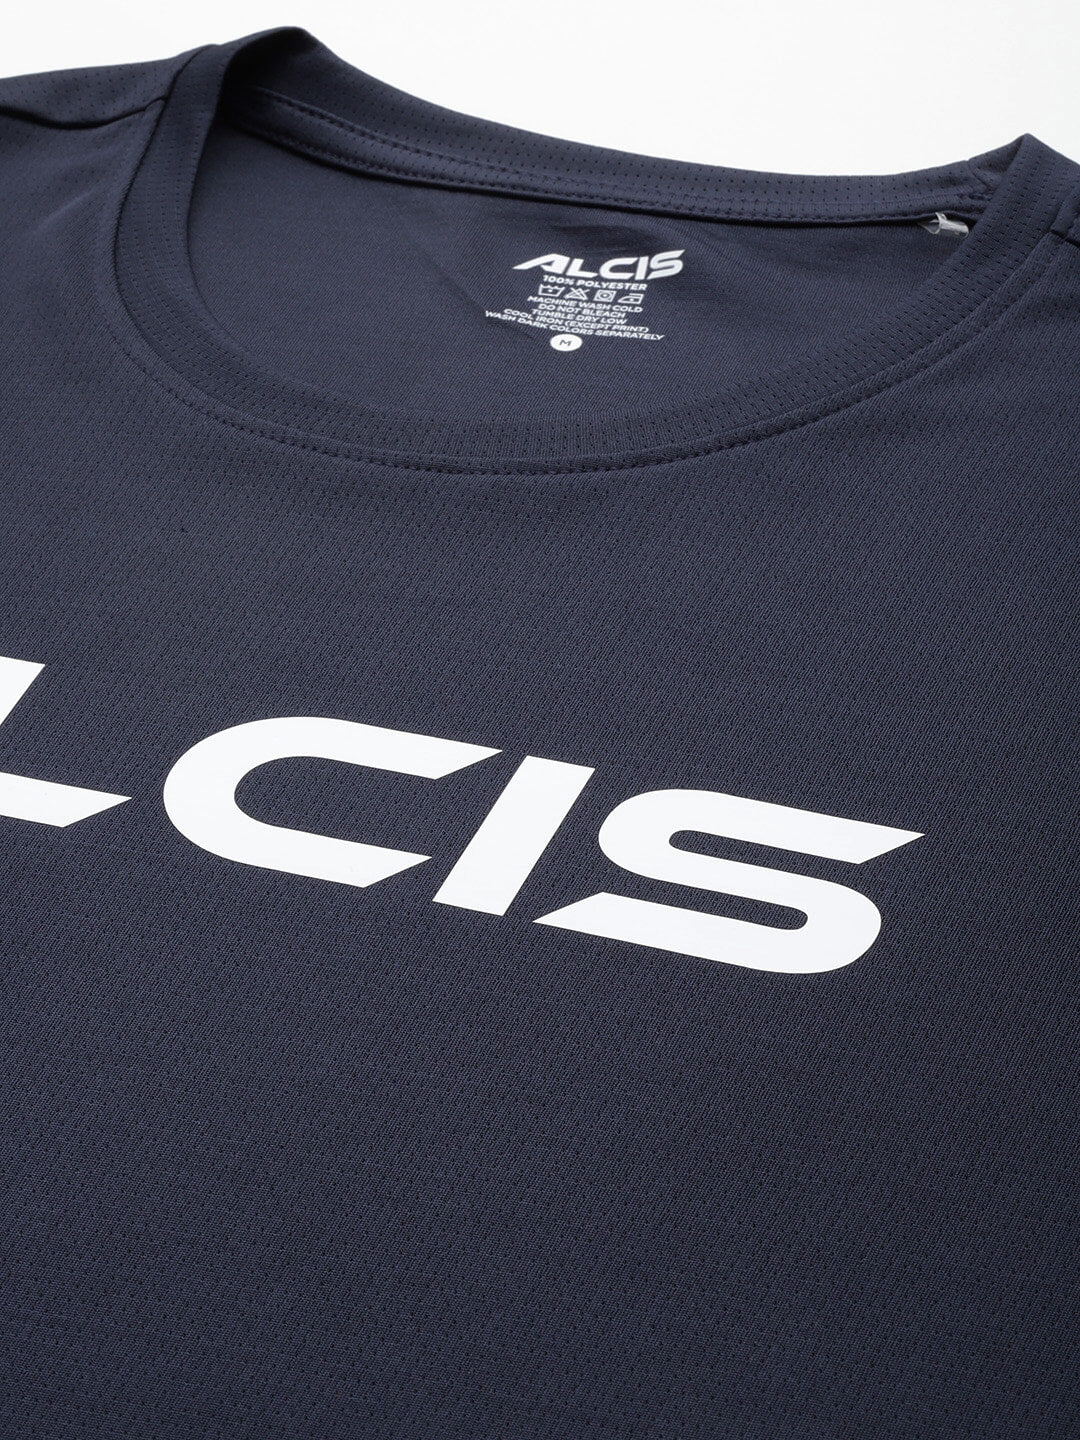 Alcis Men Brand Logo Printed Anti Static Slim Fit T-shirt